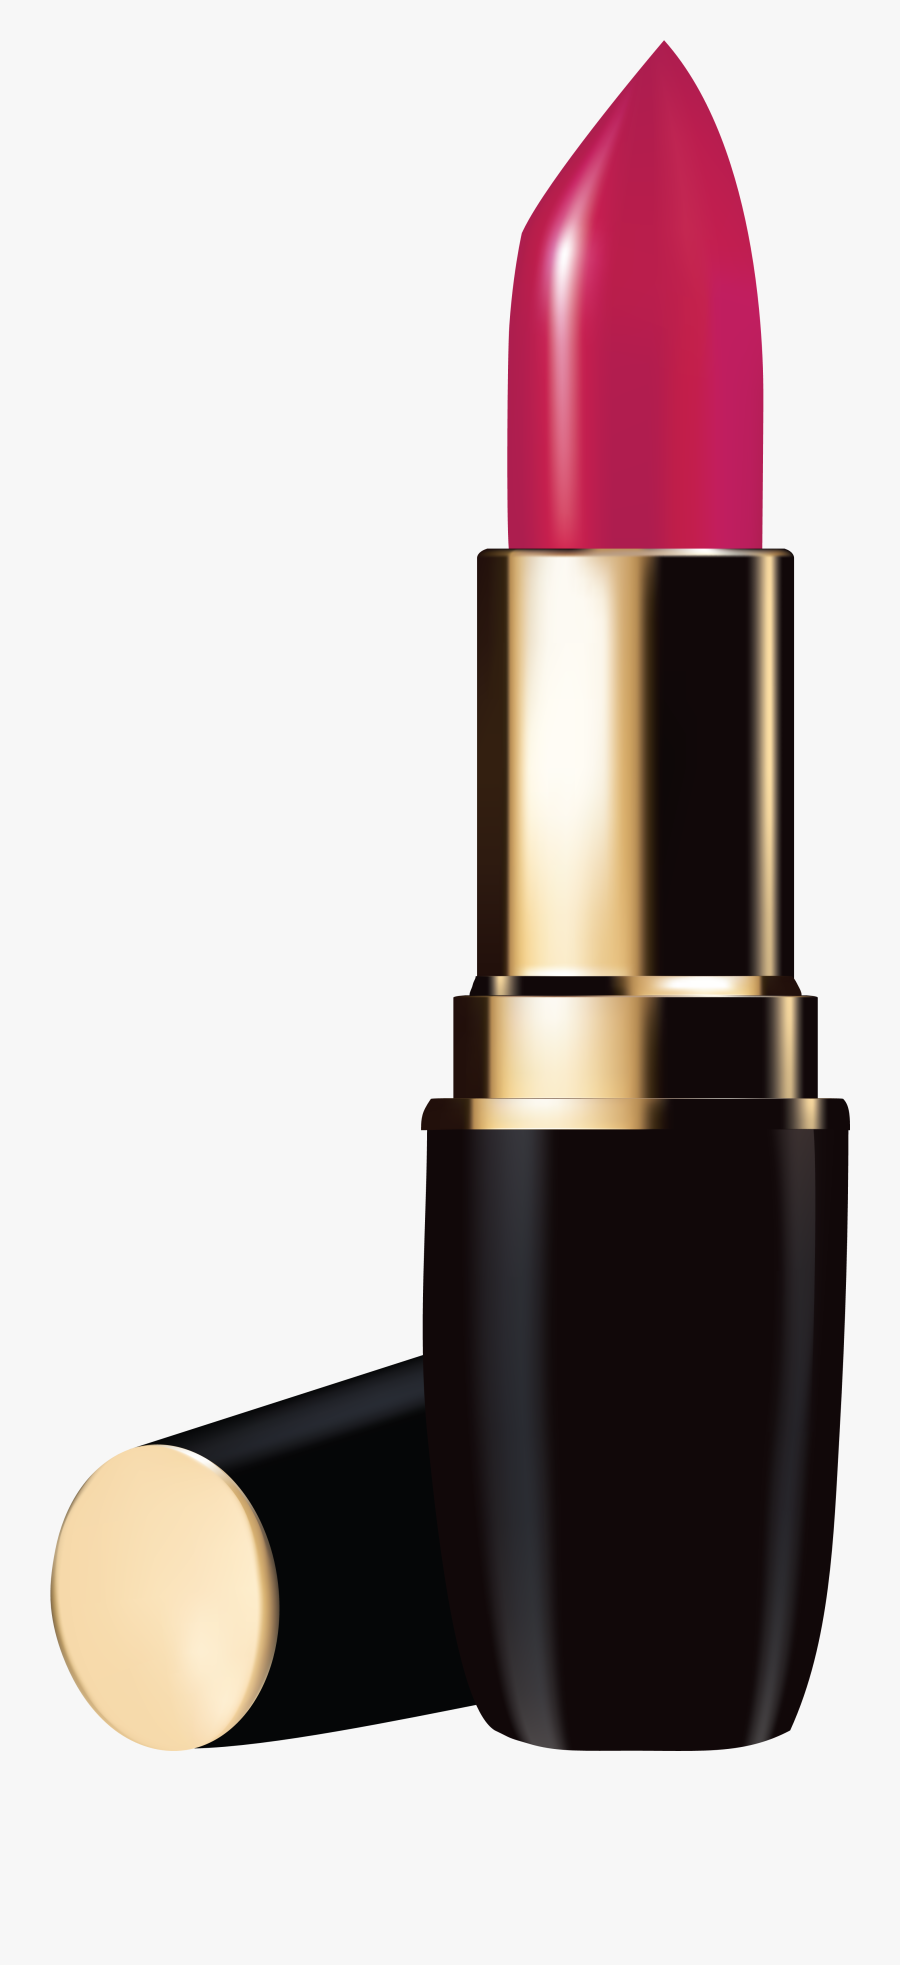 Lipstick Cosmetics Clip Art - Transparent Background Lipstick Png, Transparent Clipart